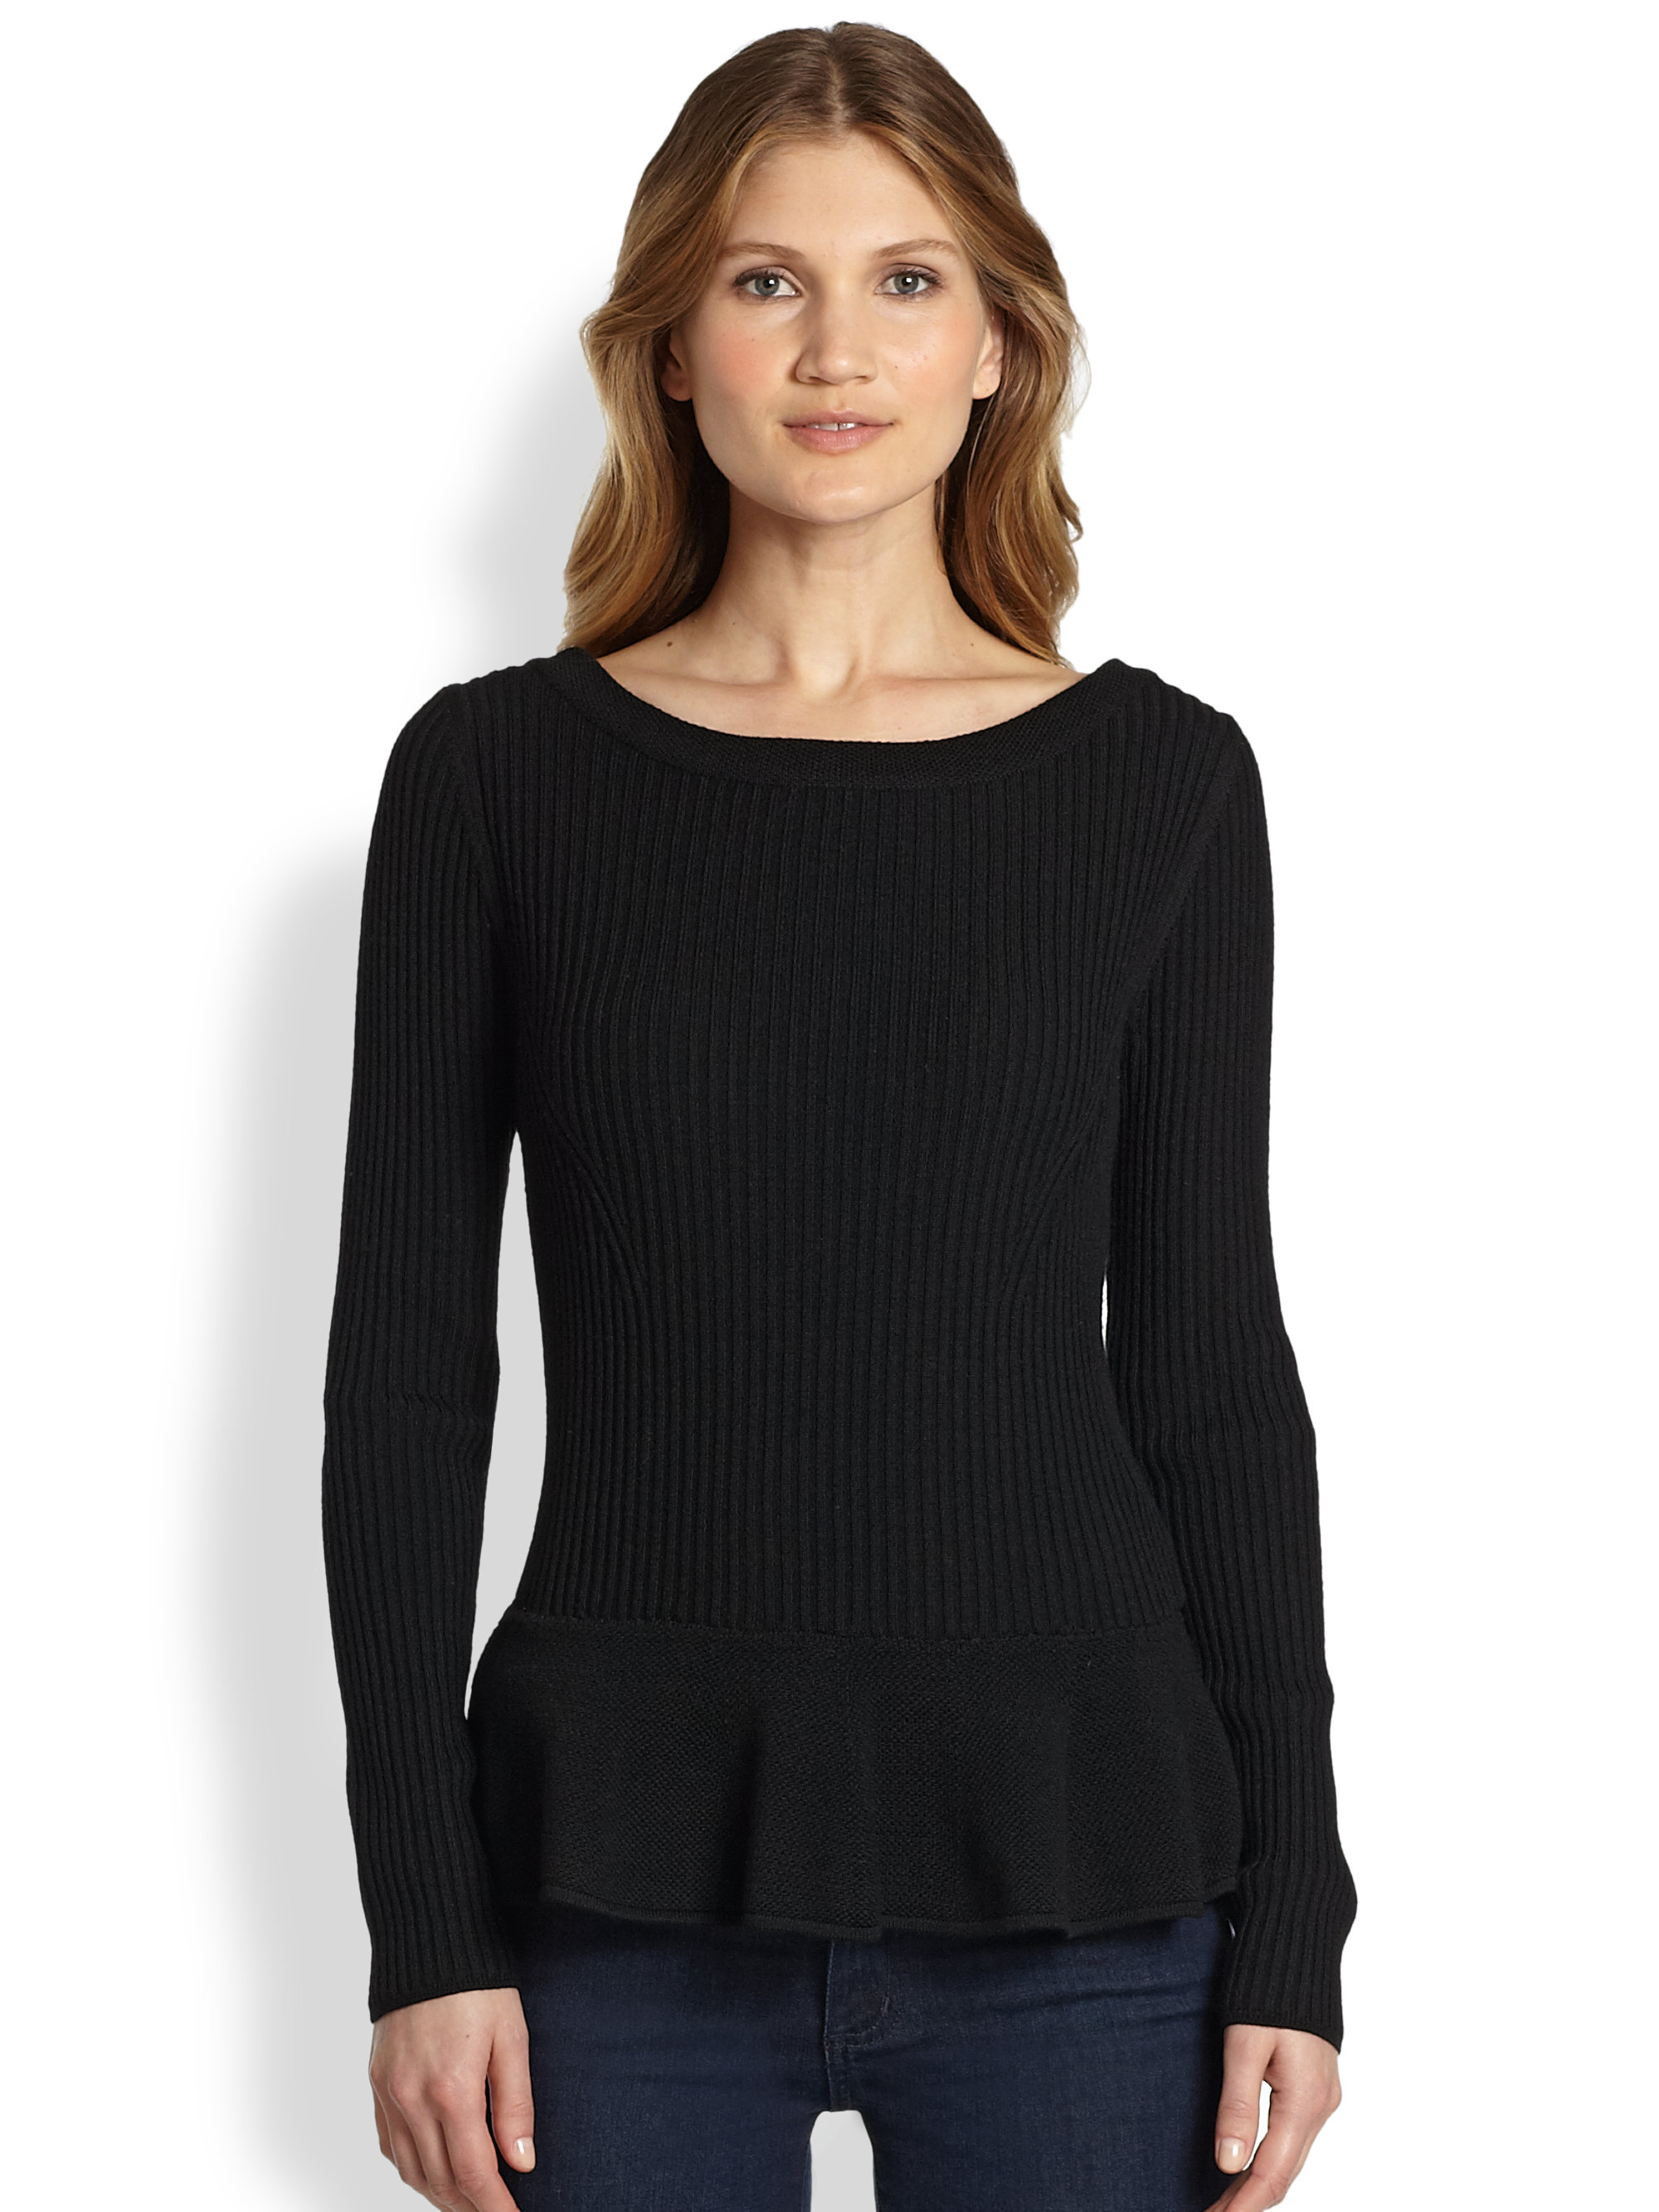 Lyst - Tory Burch Ramona Merino Wool Peplum Sweater in Black